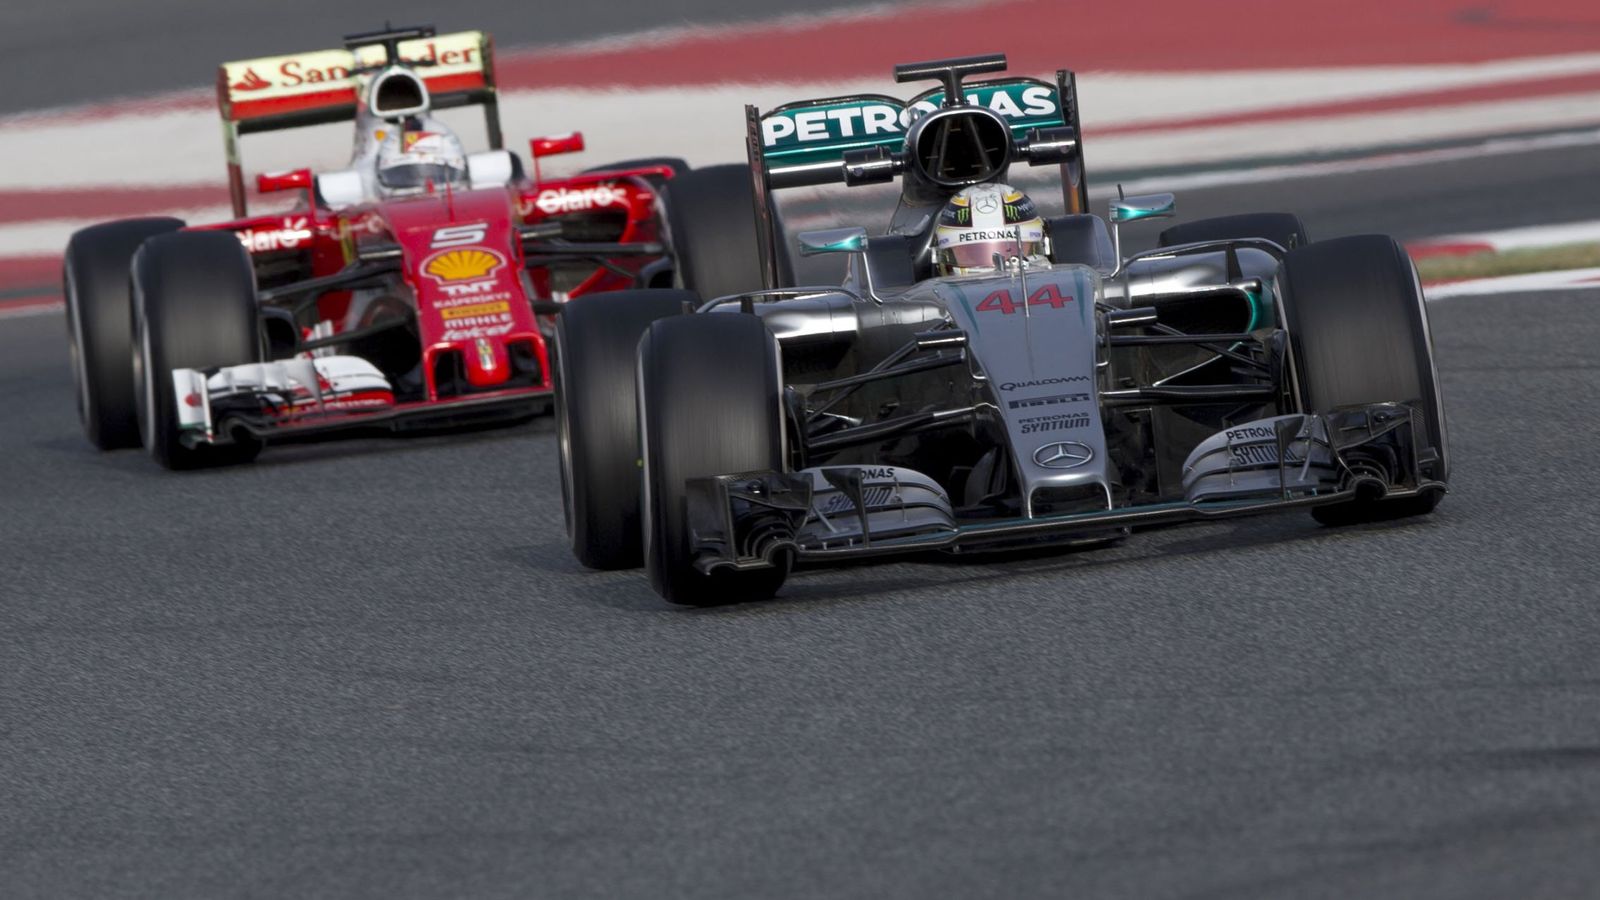 Foto: Lewis Hamilton acelerando por delante de Sebastian Vettel este pasado viernes.